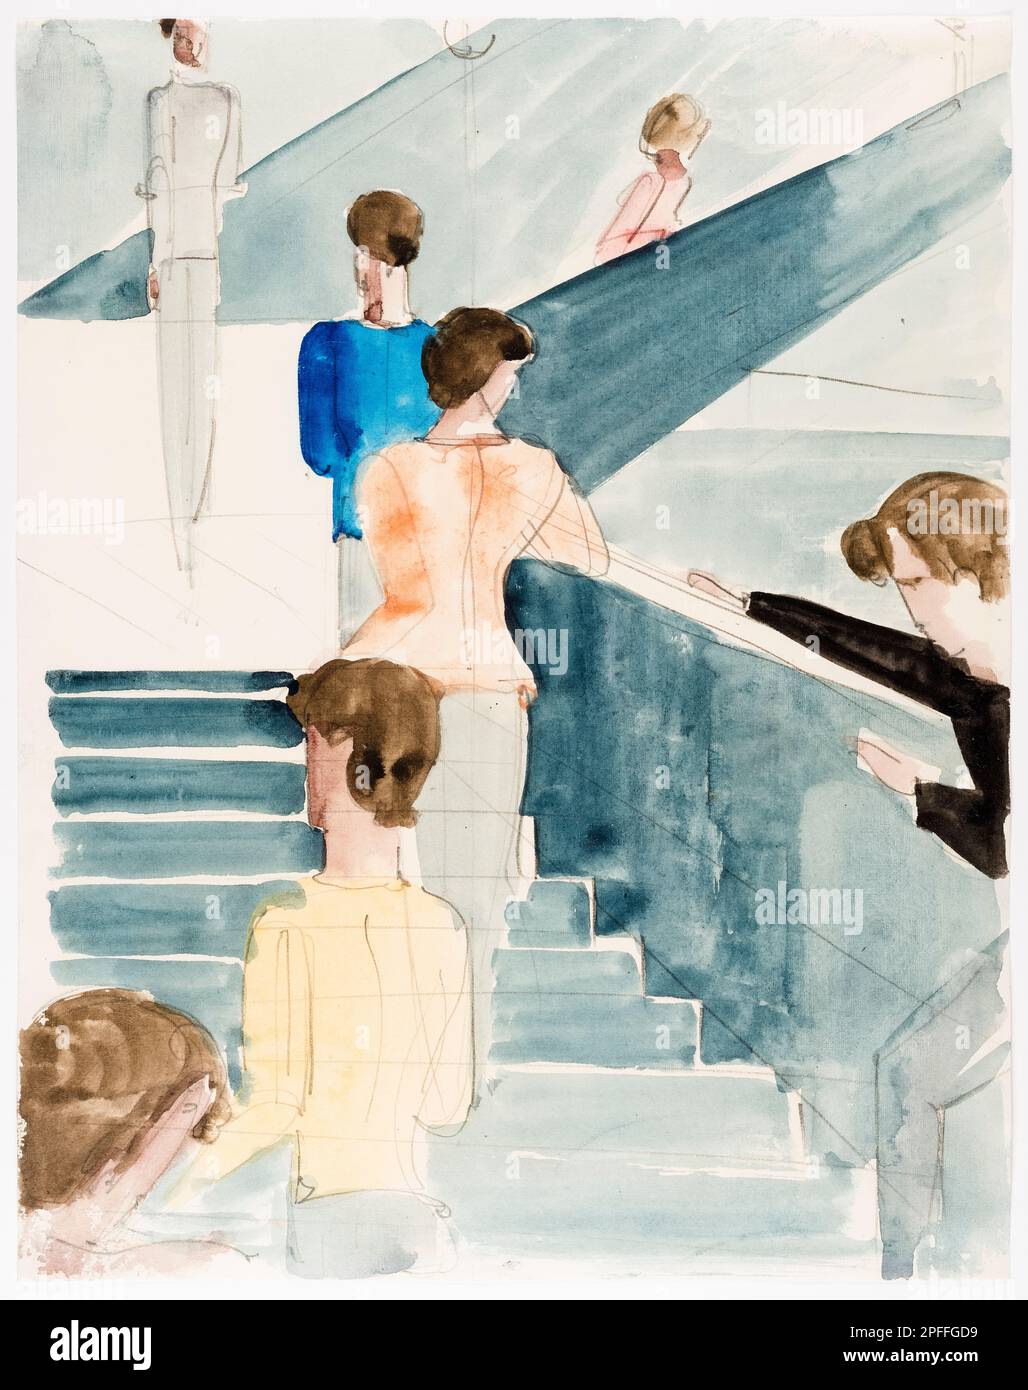 Oskar Schlemmer, Bauhaus Staircase, aquarelle, 1931-1932 Banque D'Images